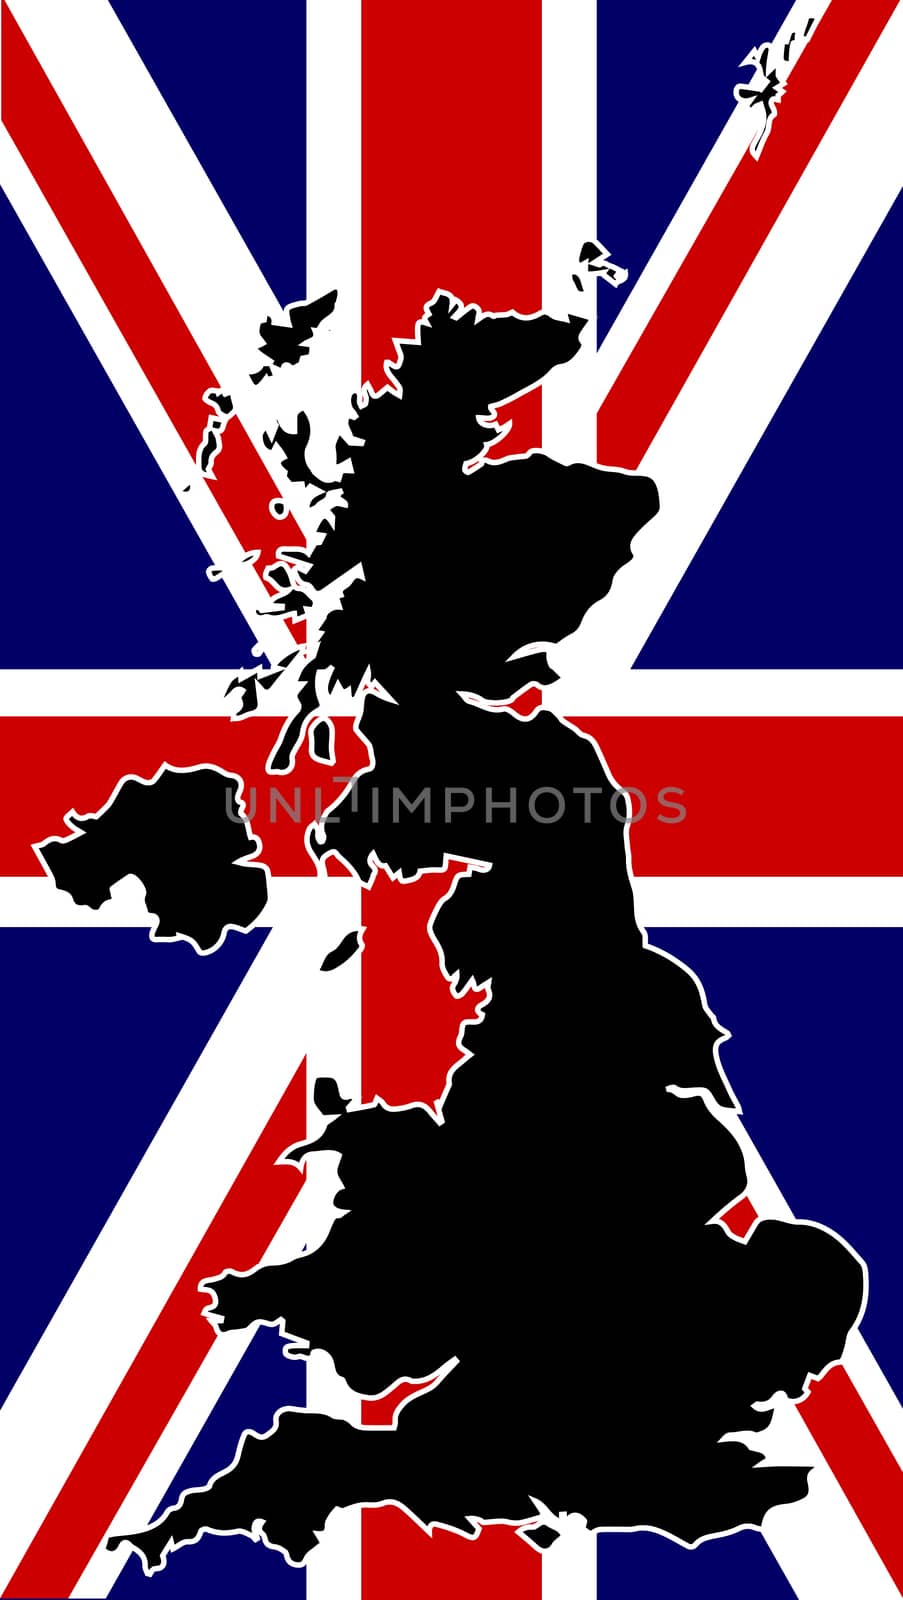 A silhouette of the United Kingdom set over a union flag.